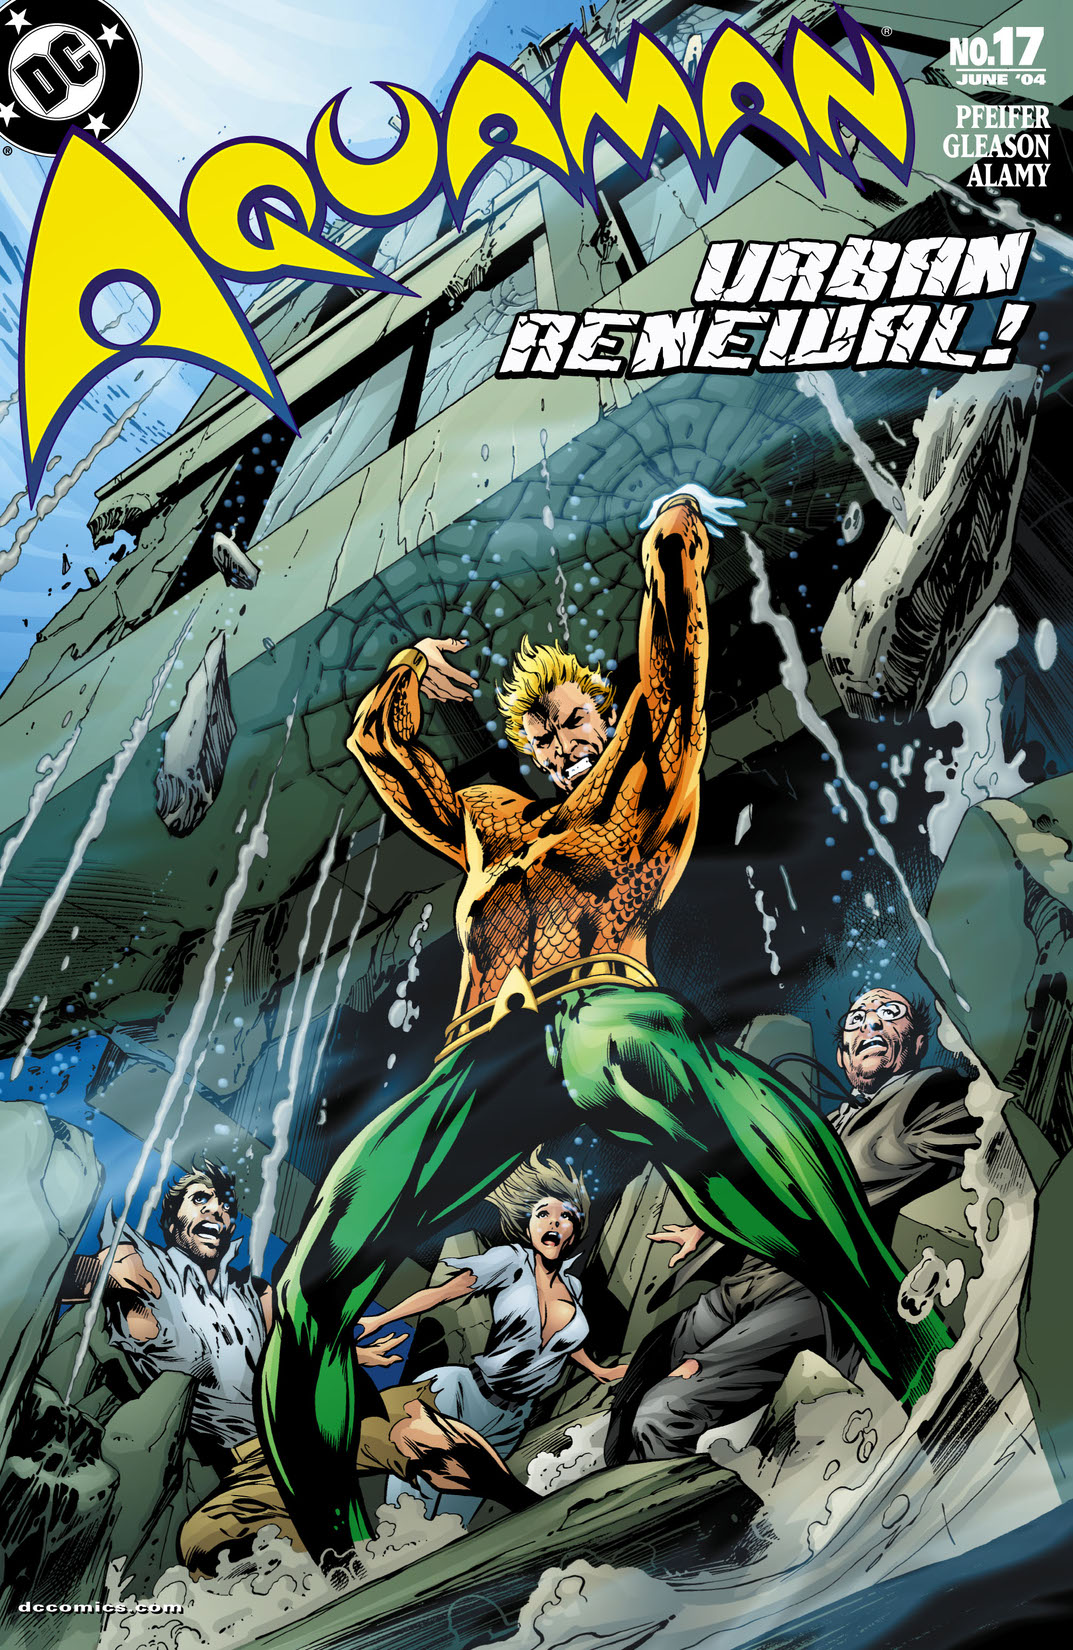 Aquaman (2002-) #17 preview images